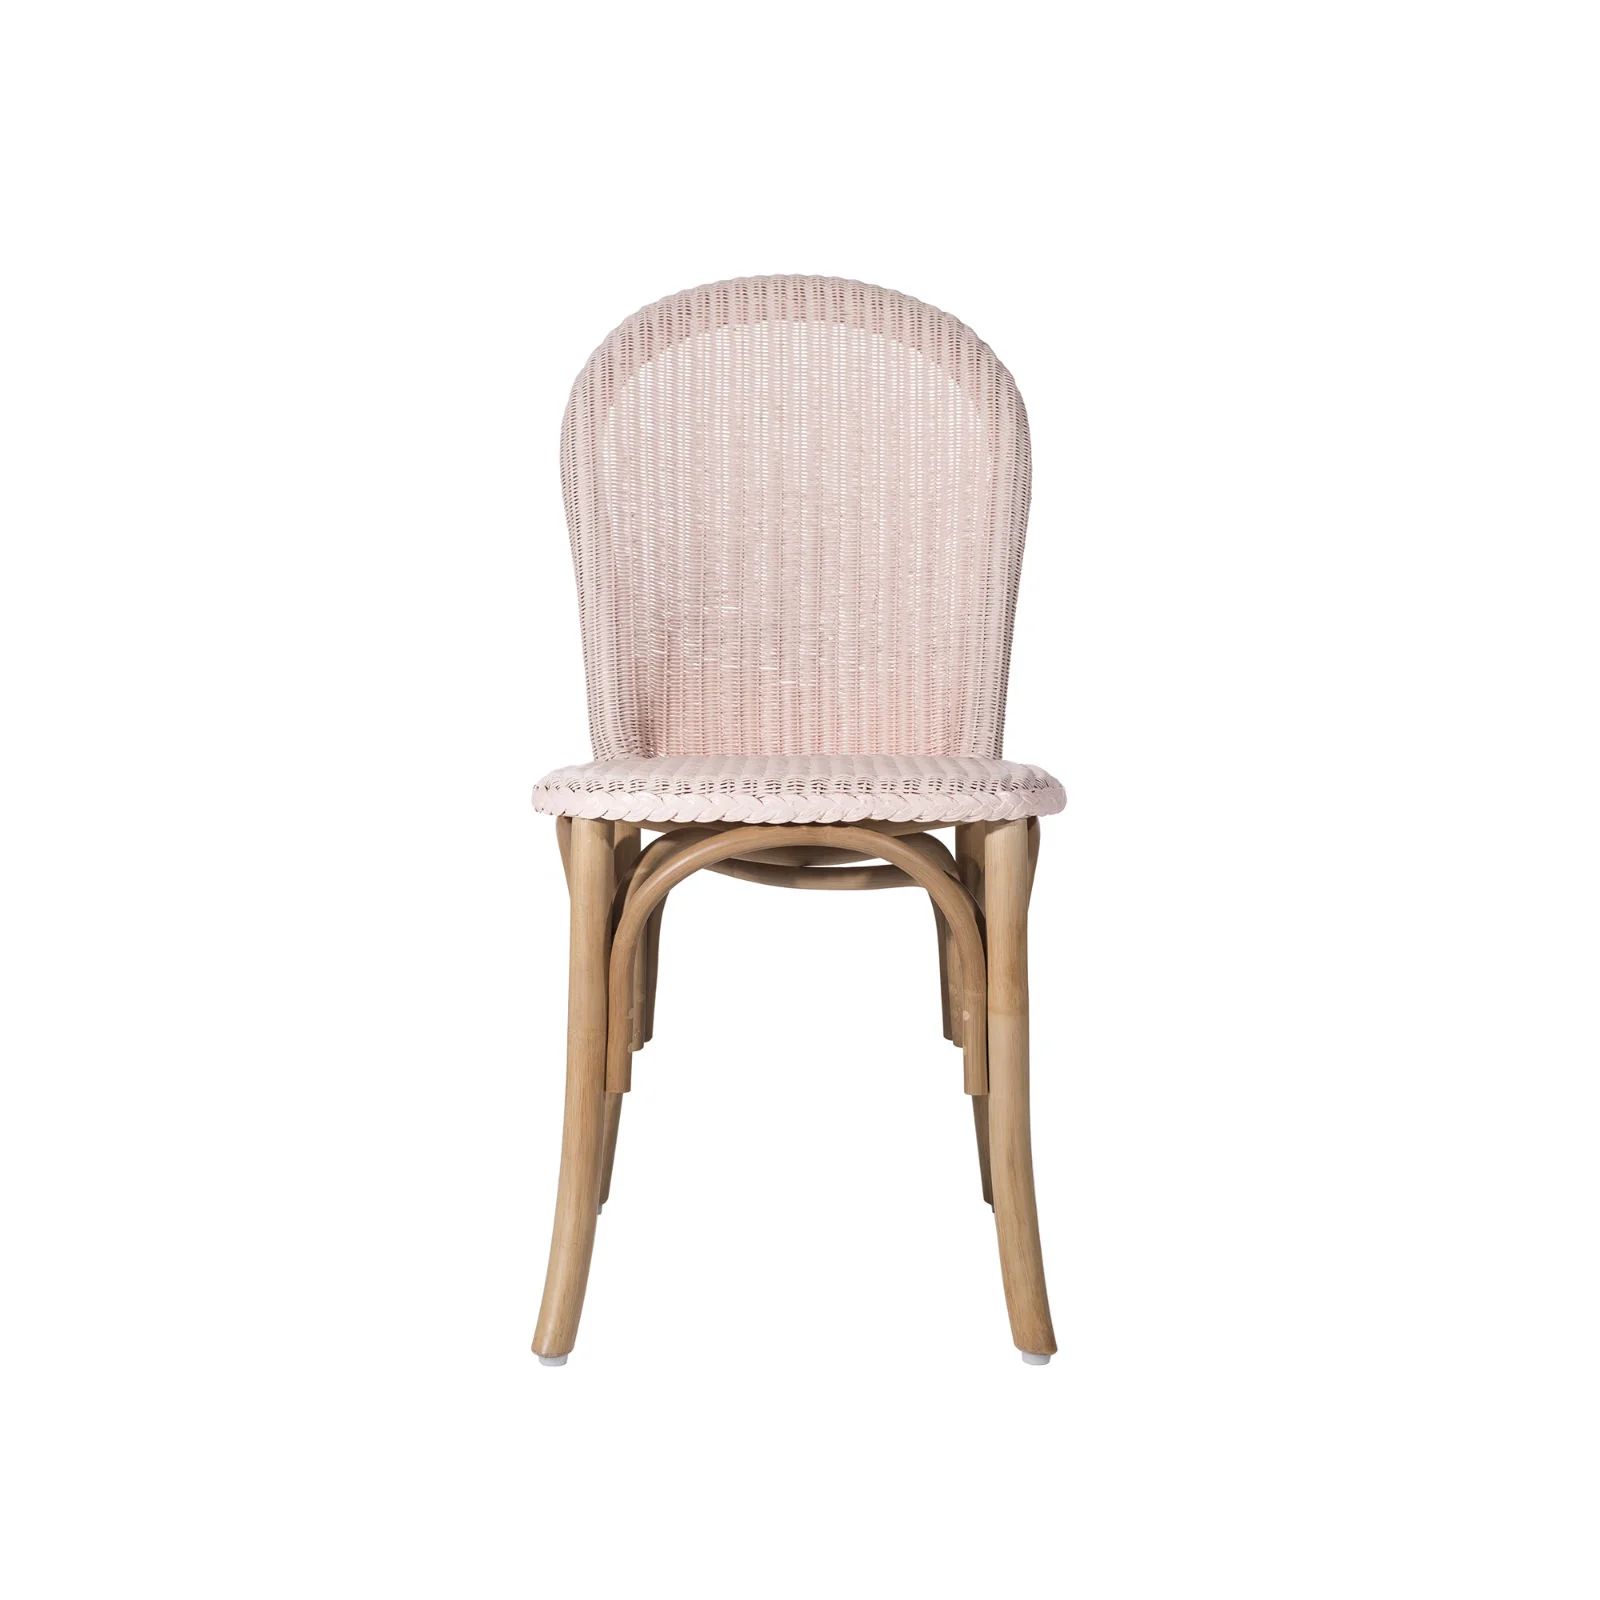 Draper Chair in Pink | Brooke & Lou | Brooke and Lou